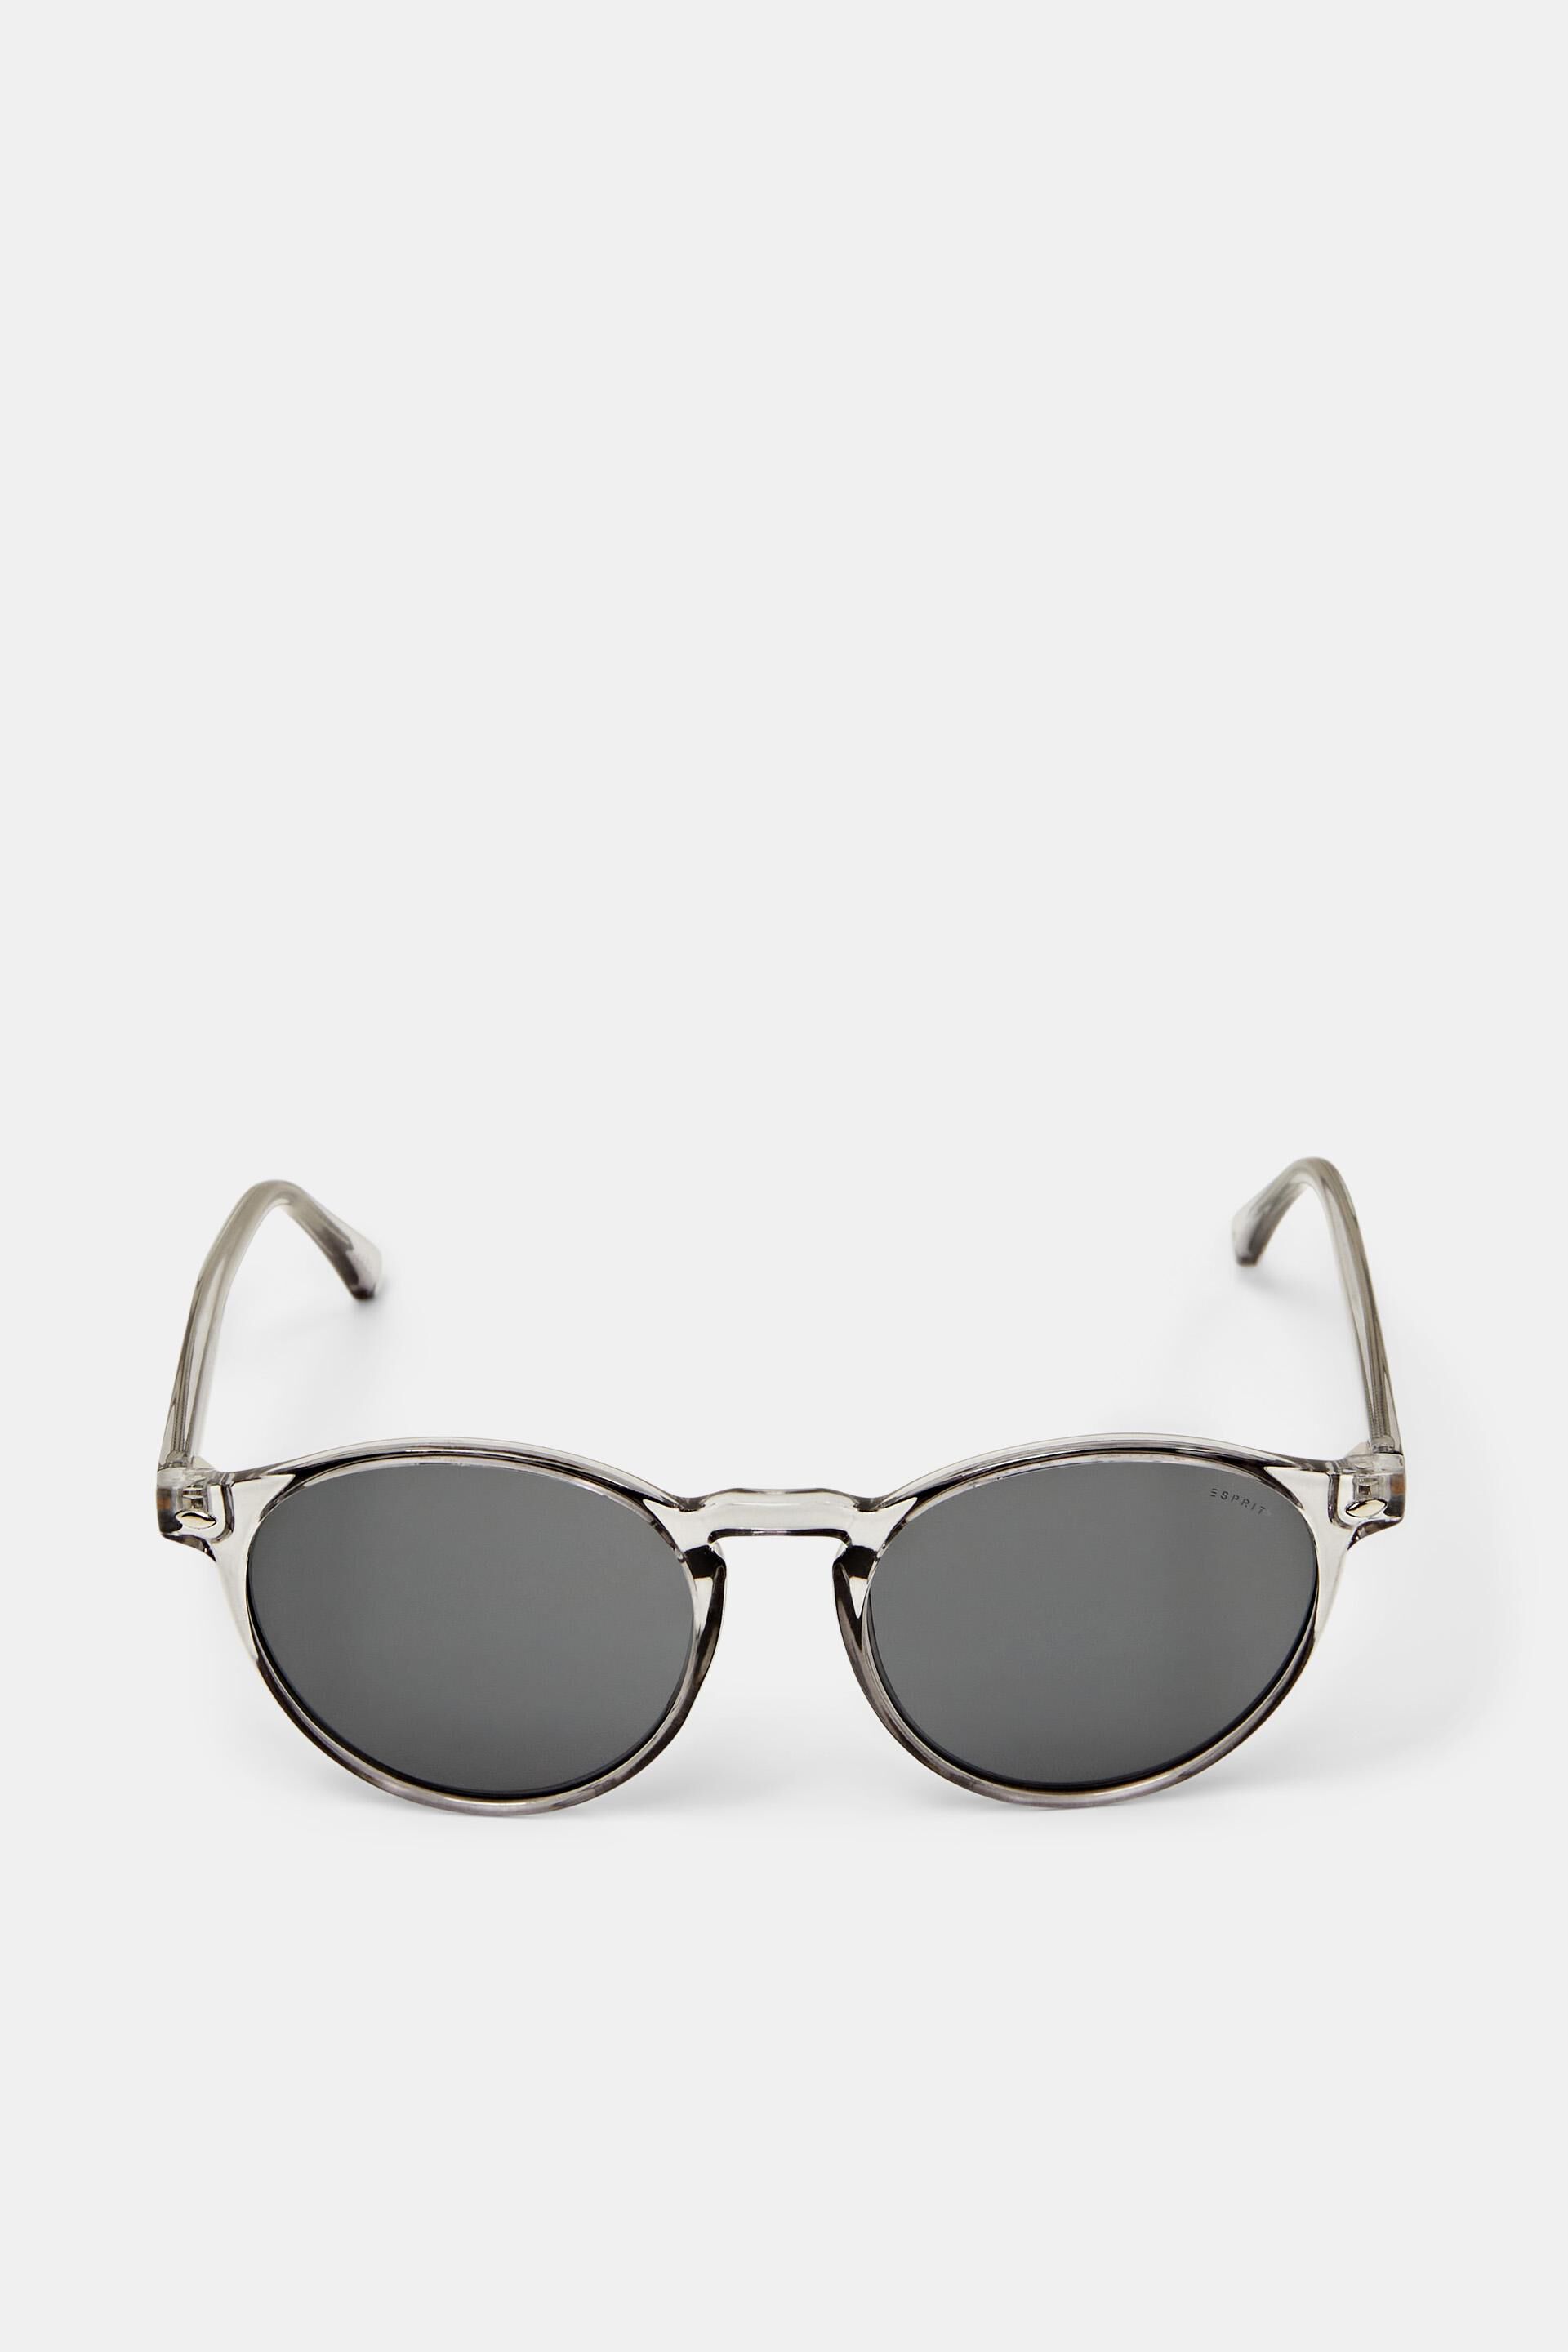 Esprit frame transparent with round Sunglasses